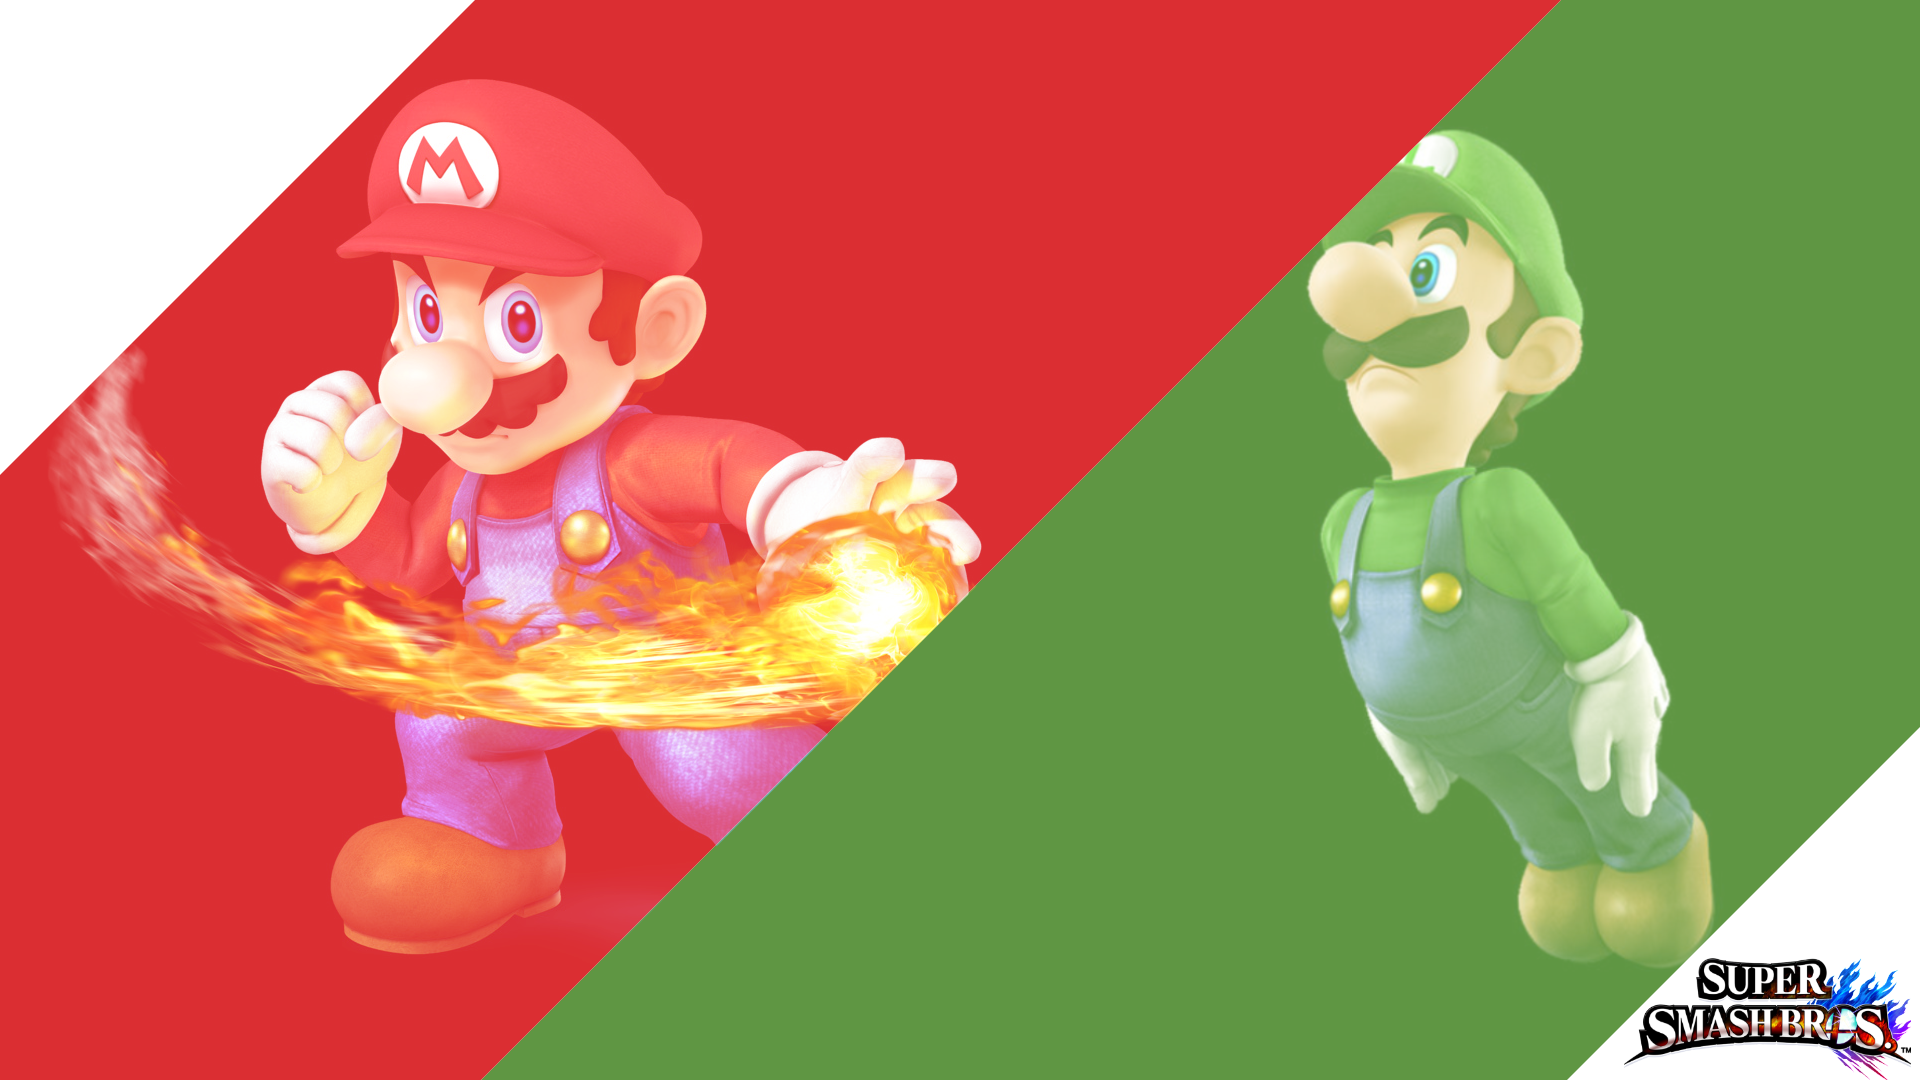 1920x1080 SSB4 - Mario & Luigi Wallpaper Background Image. 